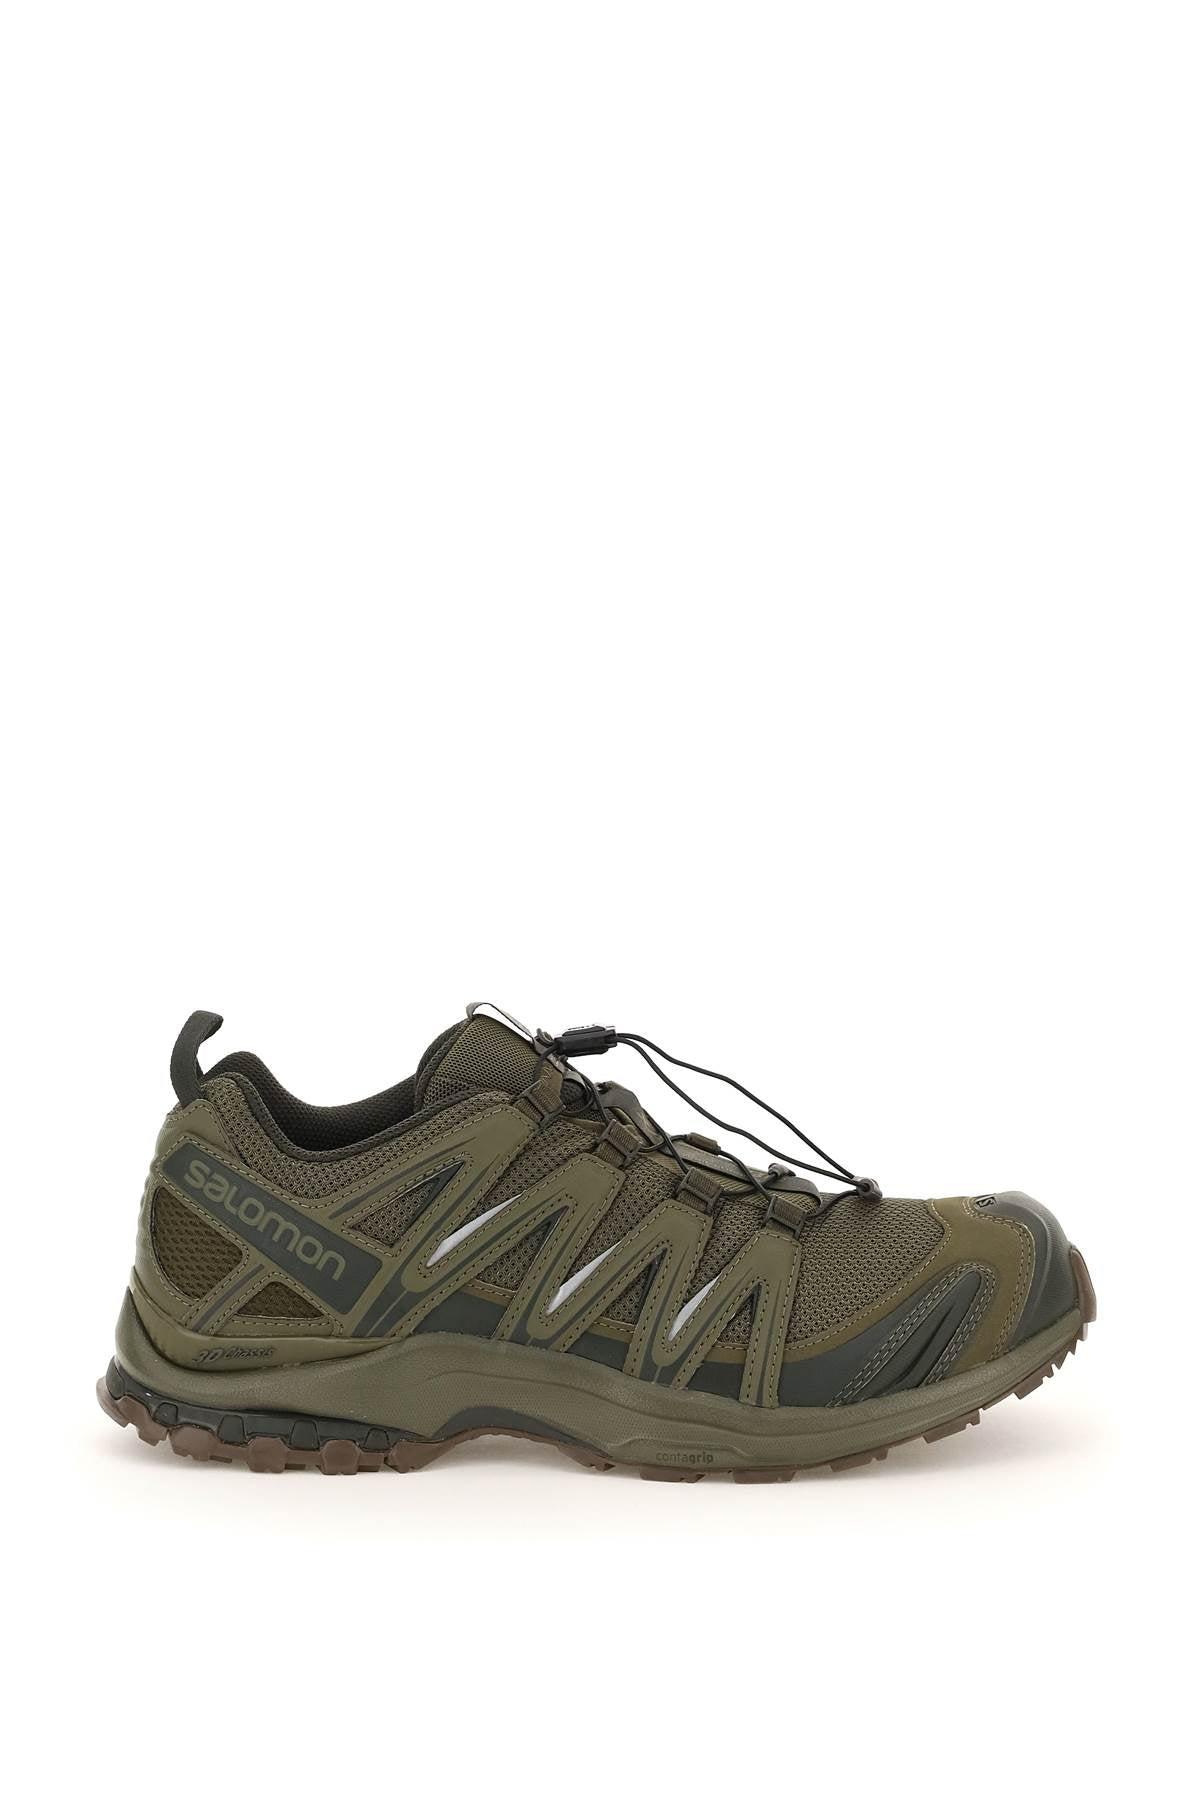 Konsultere læber sjældenhed Salomon Xa Pro 3d Trail Running Shoes | Lyst